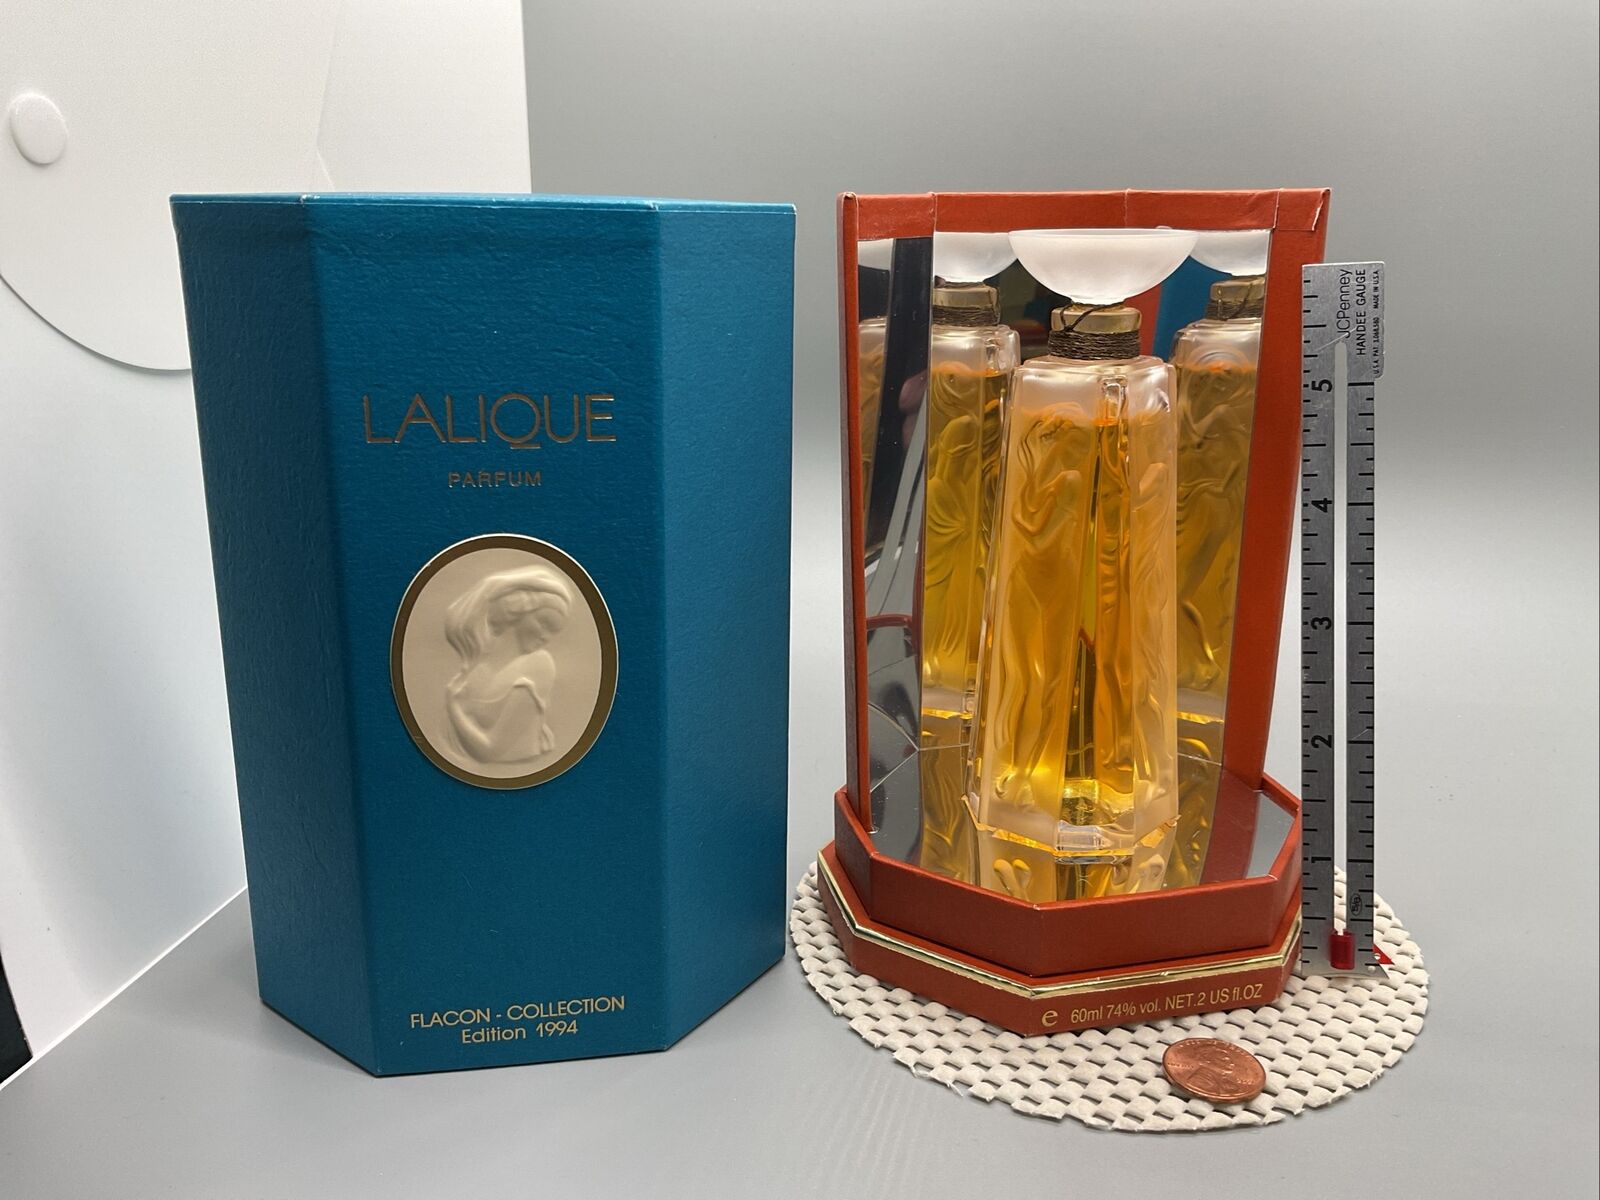 Vtg. Lalique Ltd Ed. 2 fl oz “Les Muses” Flacon Collection 1994 New Display Box